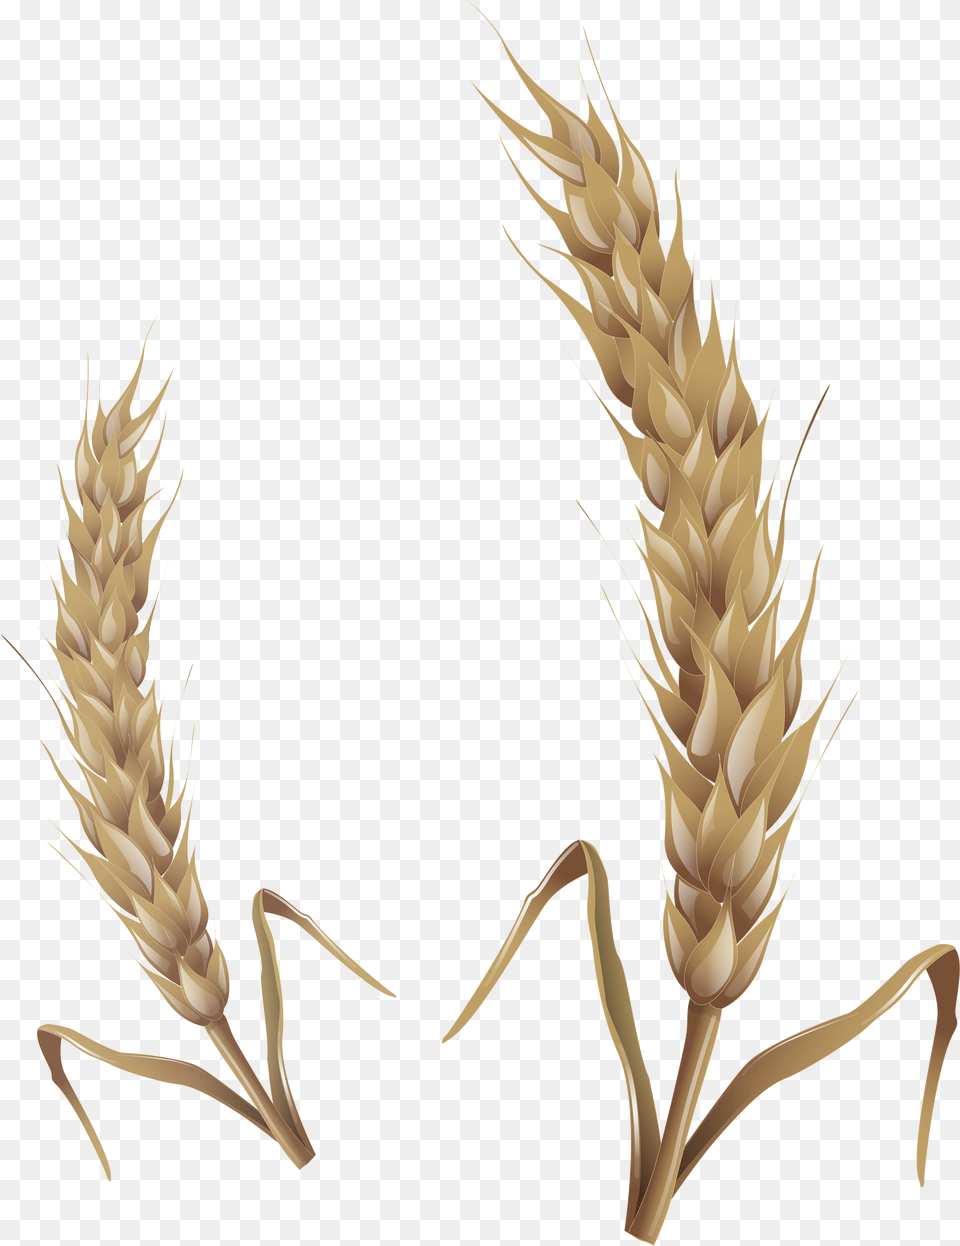 Wheat Stalks Wheat, Food, Grain, Produce, Chandelier Png Image